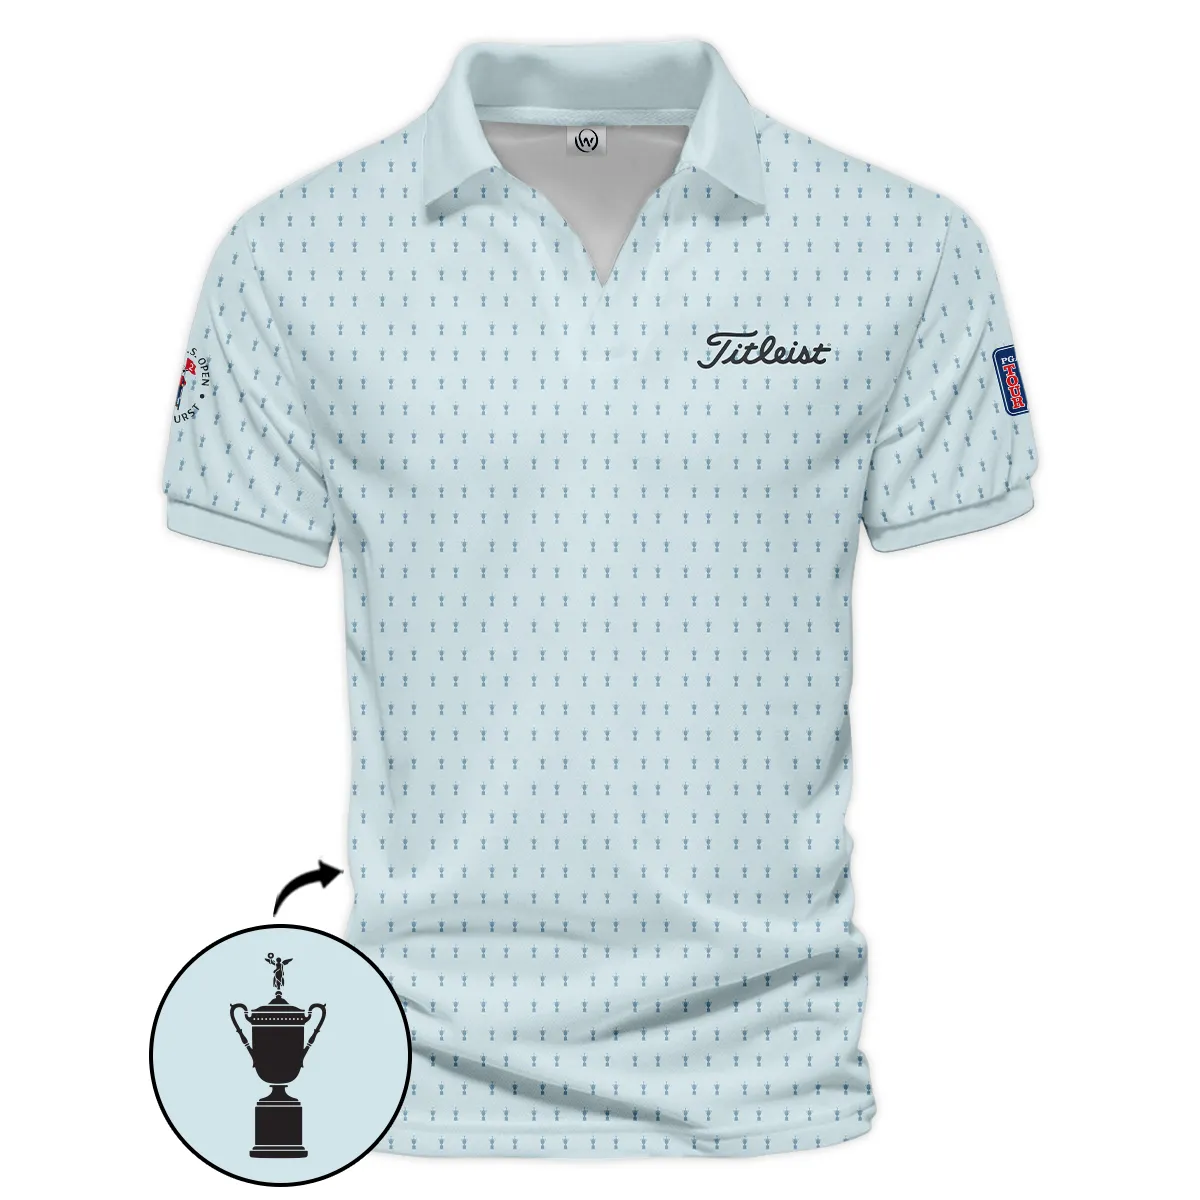 Golf Pattern Cup Light Blue Mix Green 124th U.S. Open Pinehurst Pinehurst Titleist Vneck Polo Shirt Style Classic